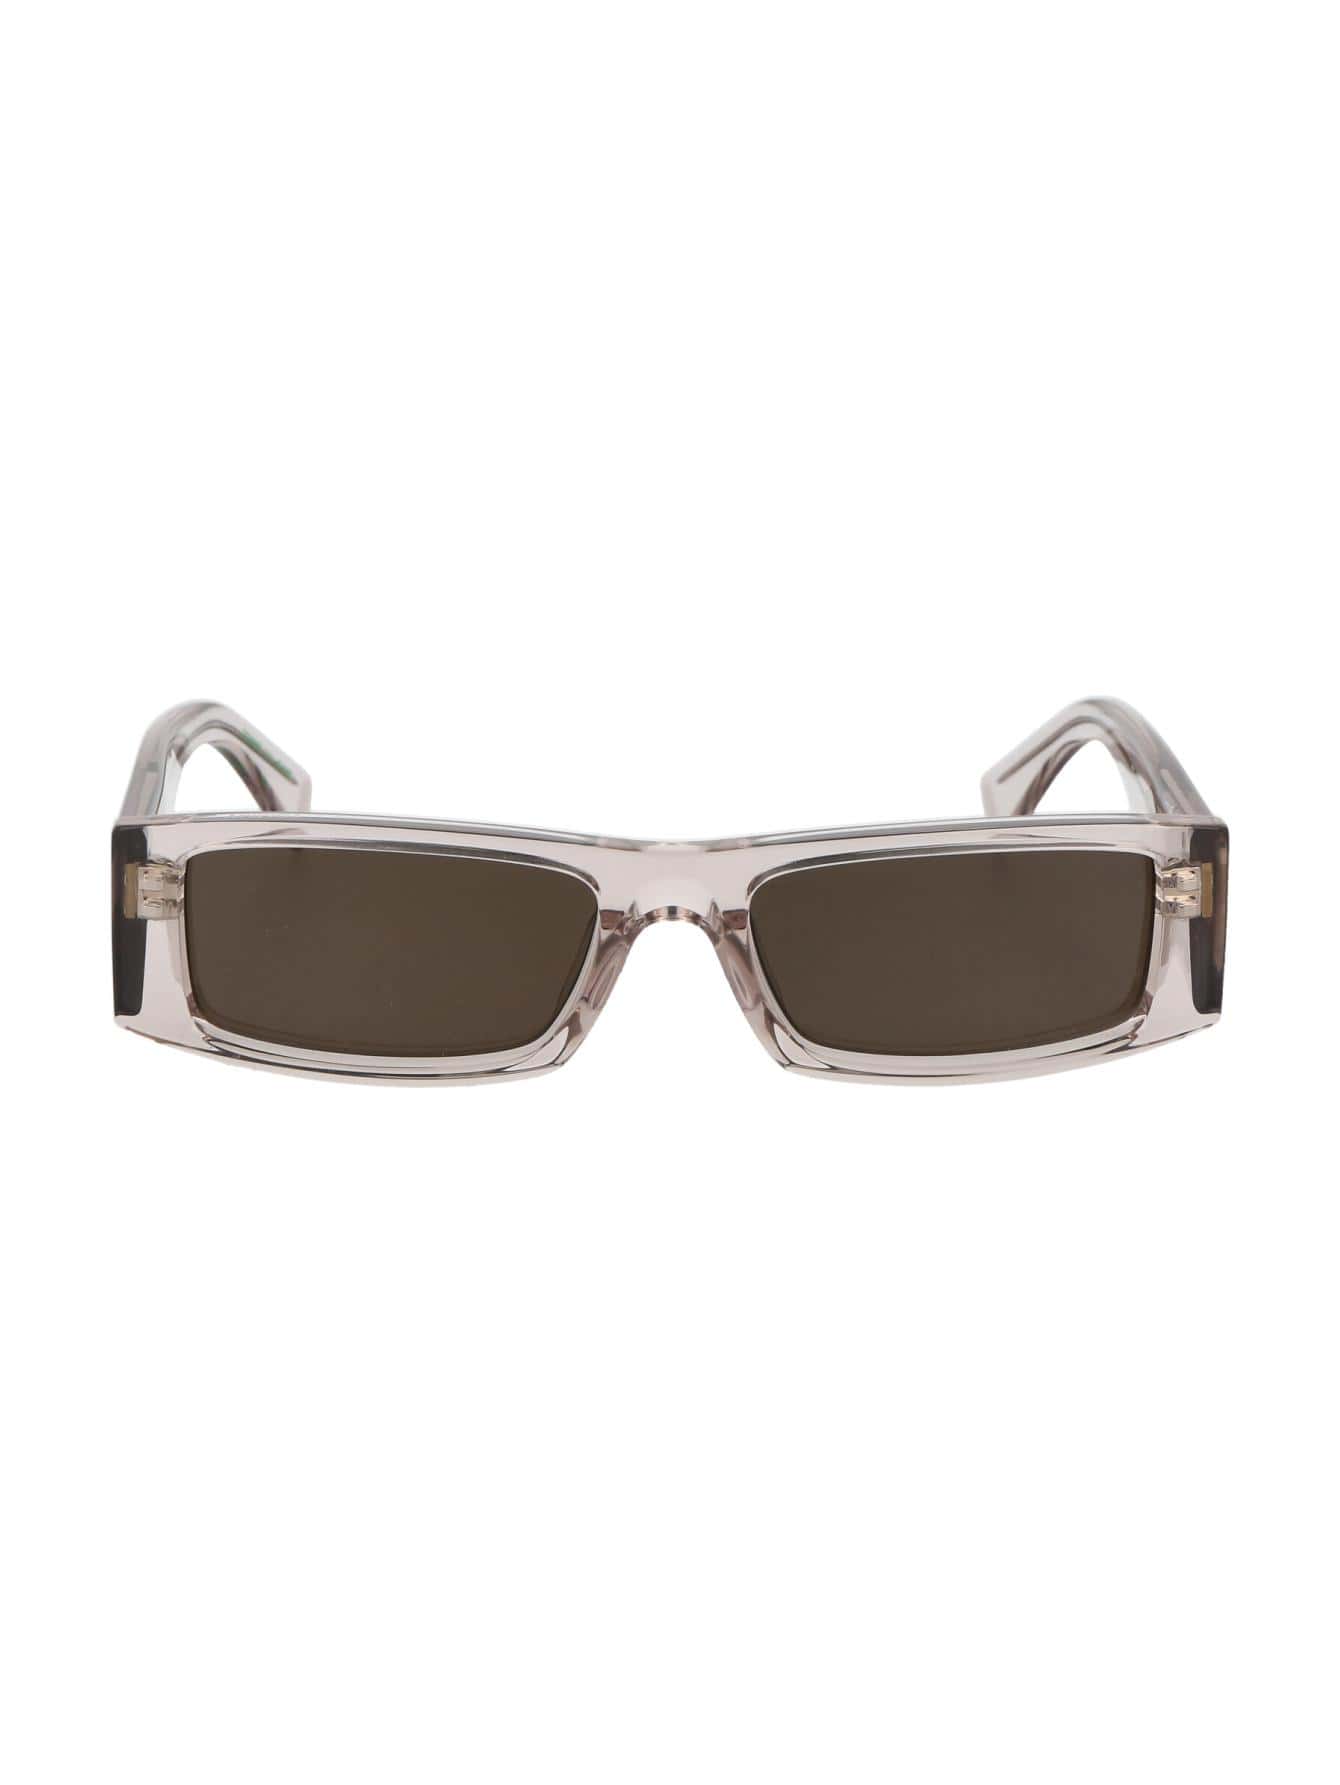 Мужские солнцезащитные очки Tommy Hilfiger DECOR TJ0092S10A70, многоцветный мужские солнцезащитные очки tommy hilfiger decor tj0092s10a70 многоцветный